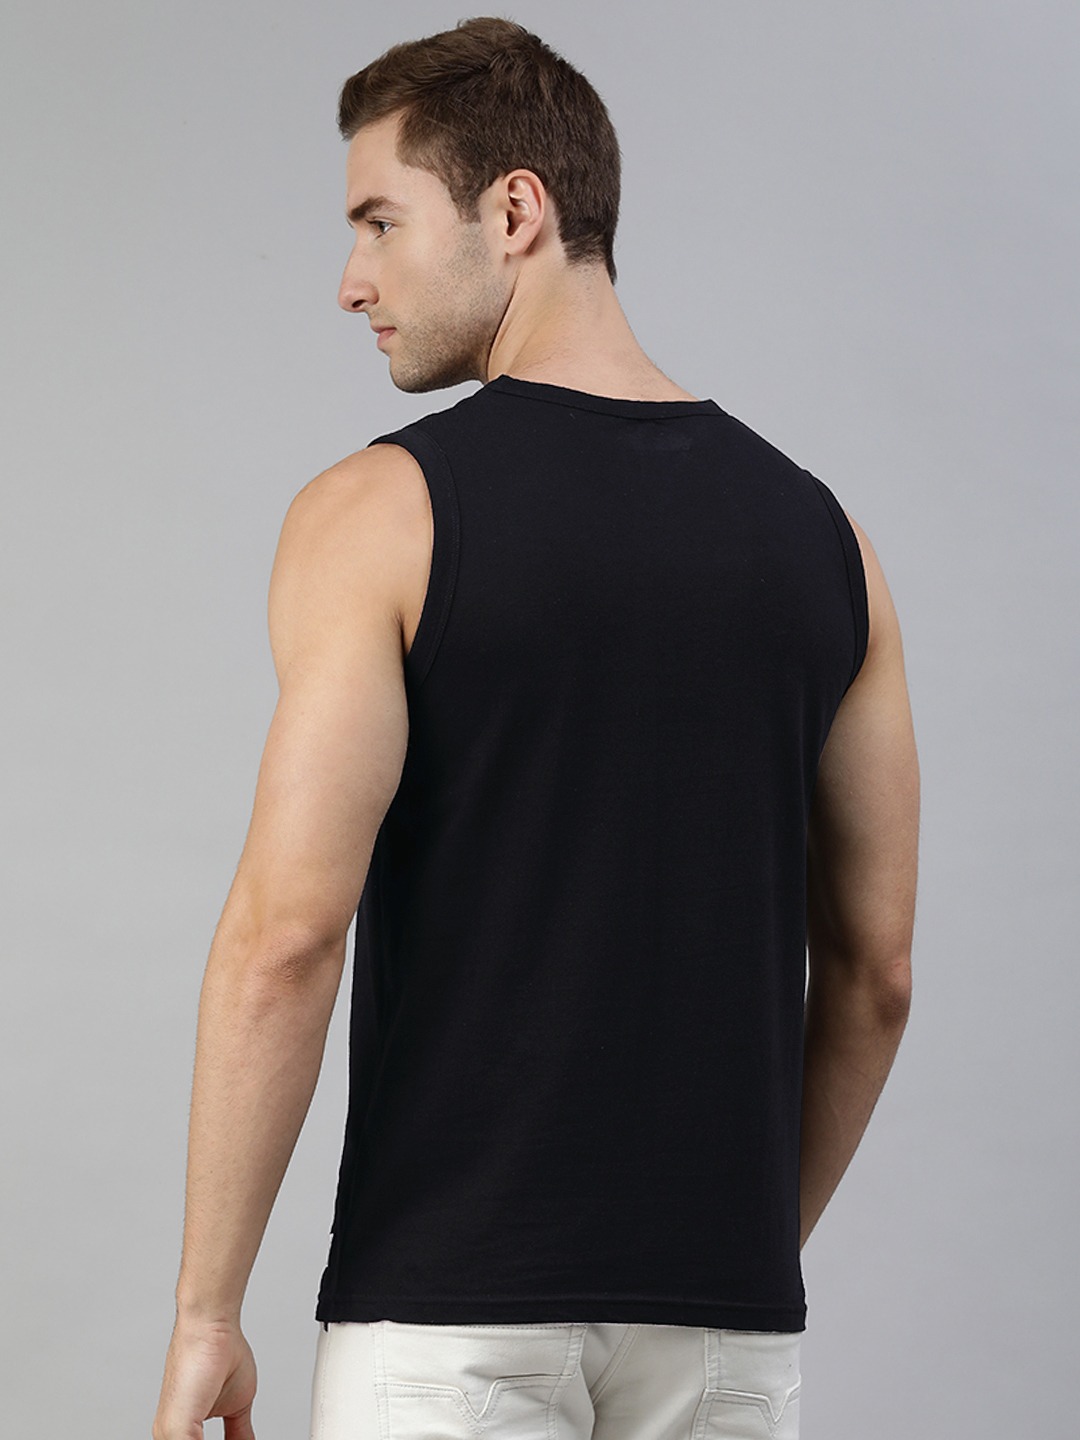 Clothing Innerwear Vests | abof Men Black & White Printed Pure Cotton Innerwear Vest - EL98814